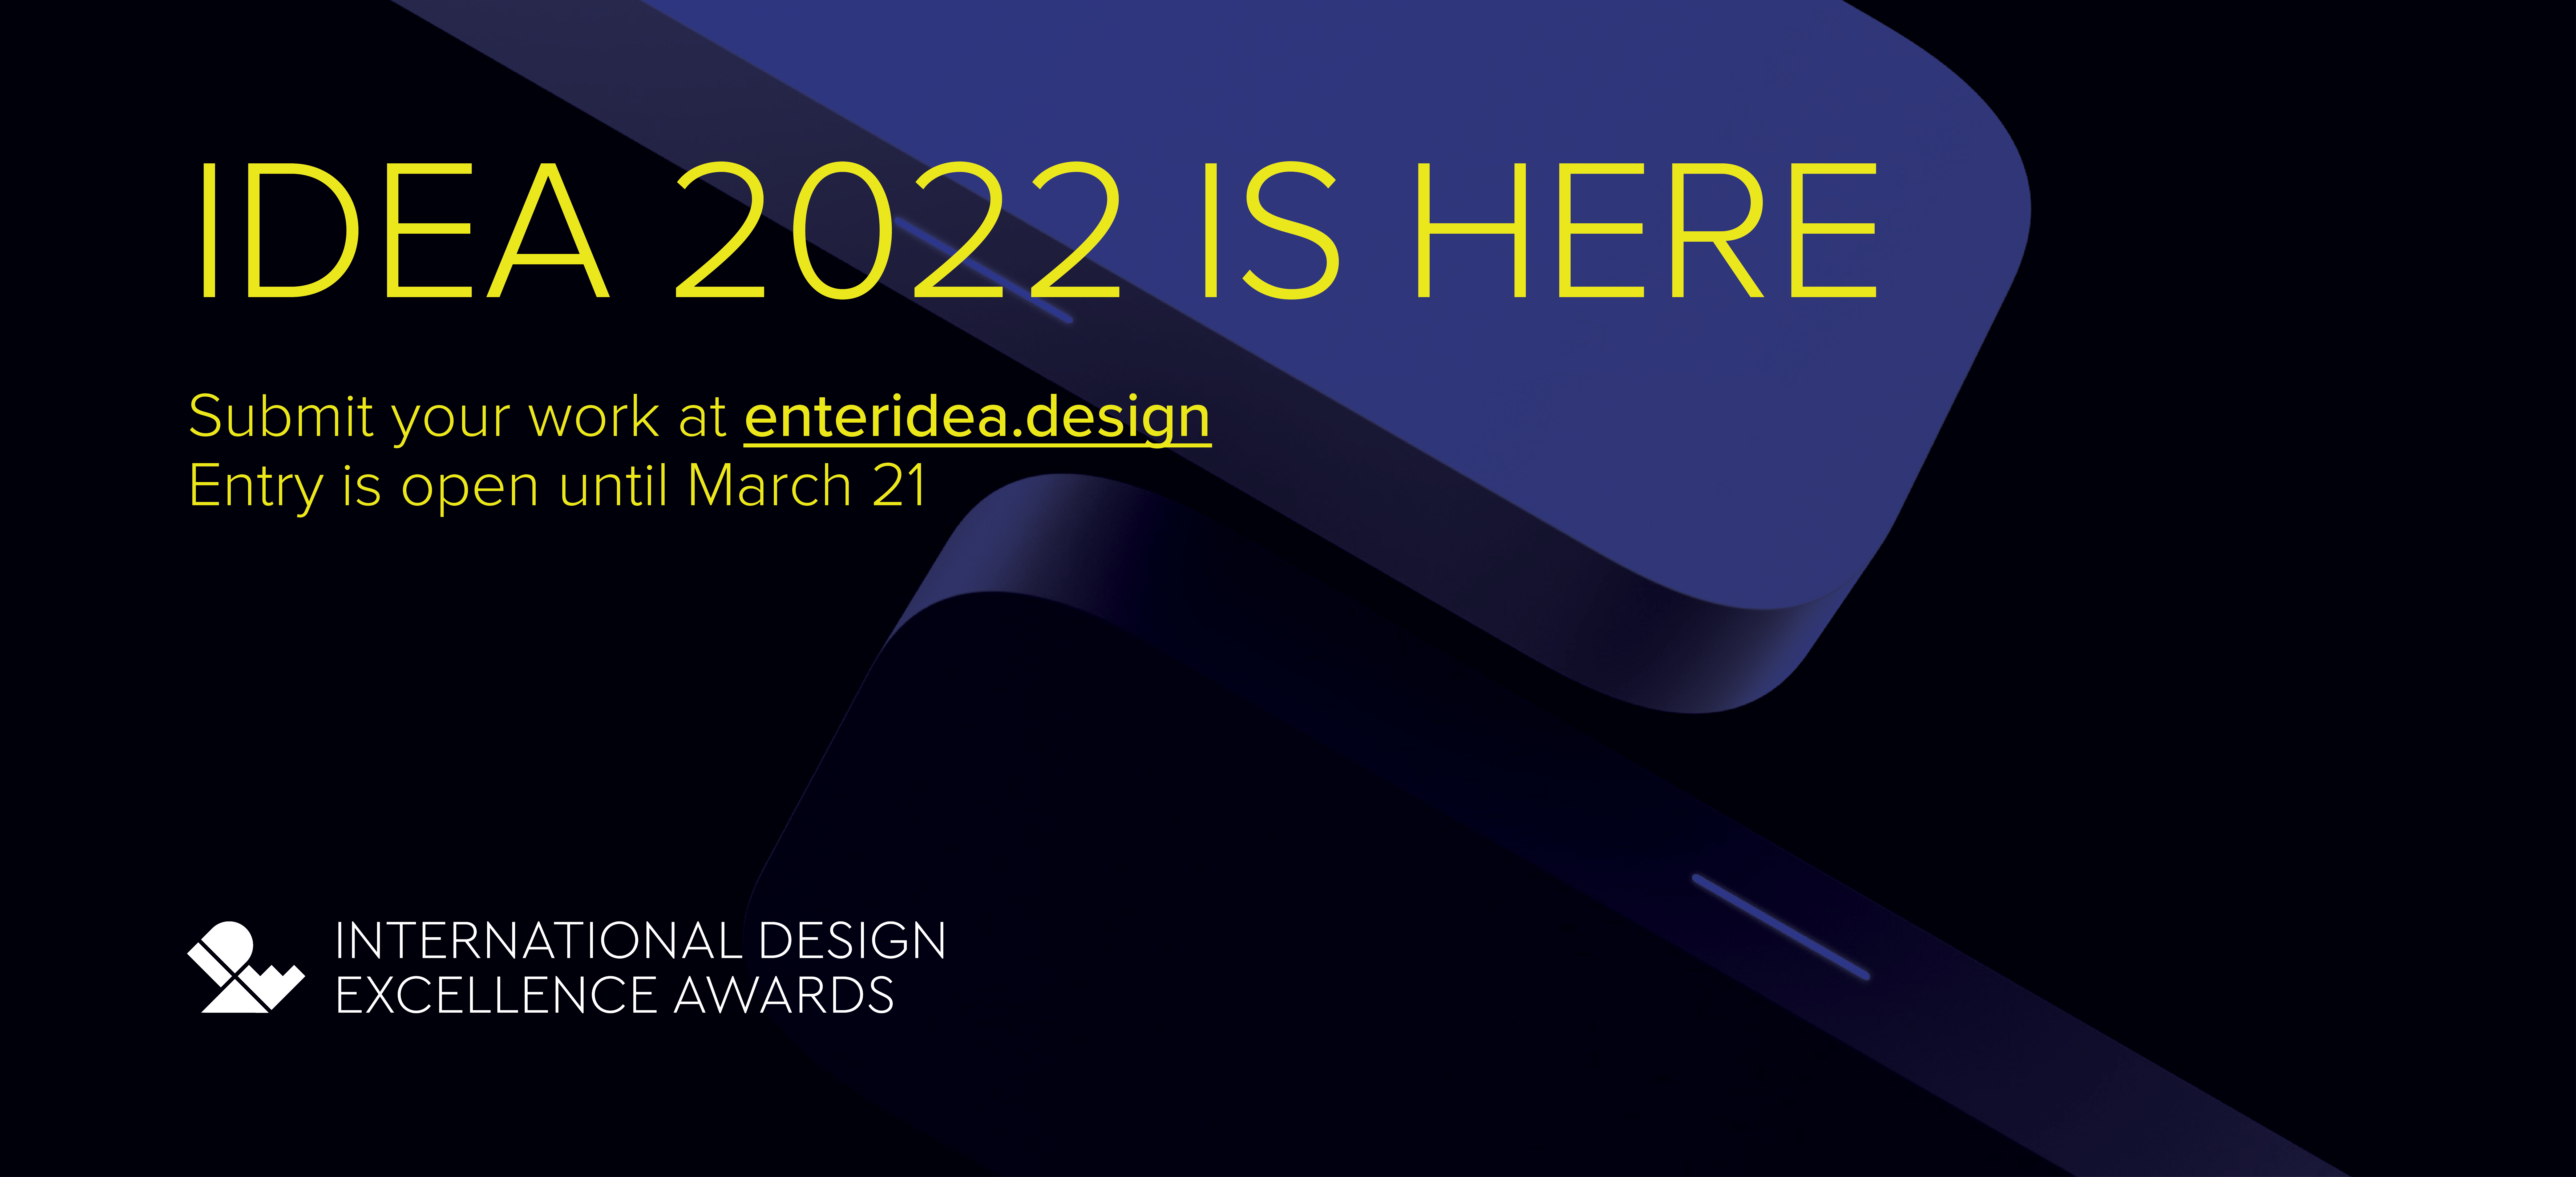 International Design Excellence Awards (IDEA) 2022